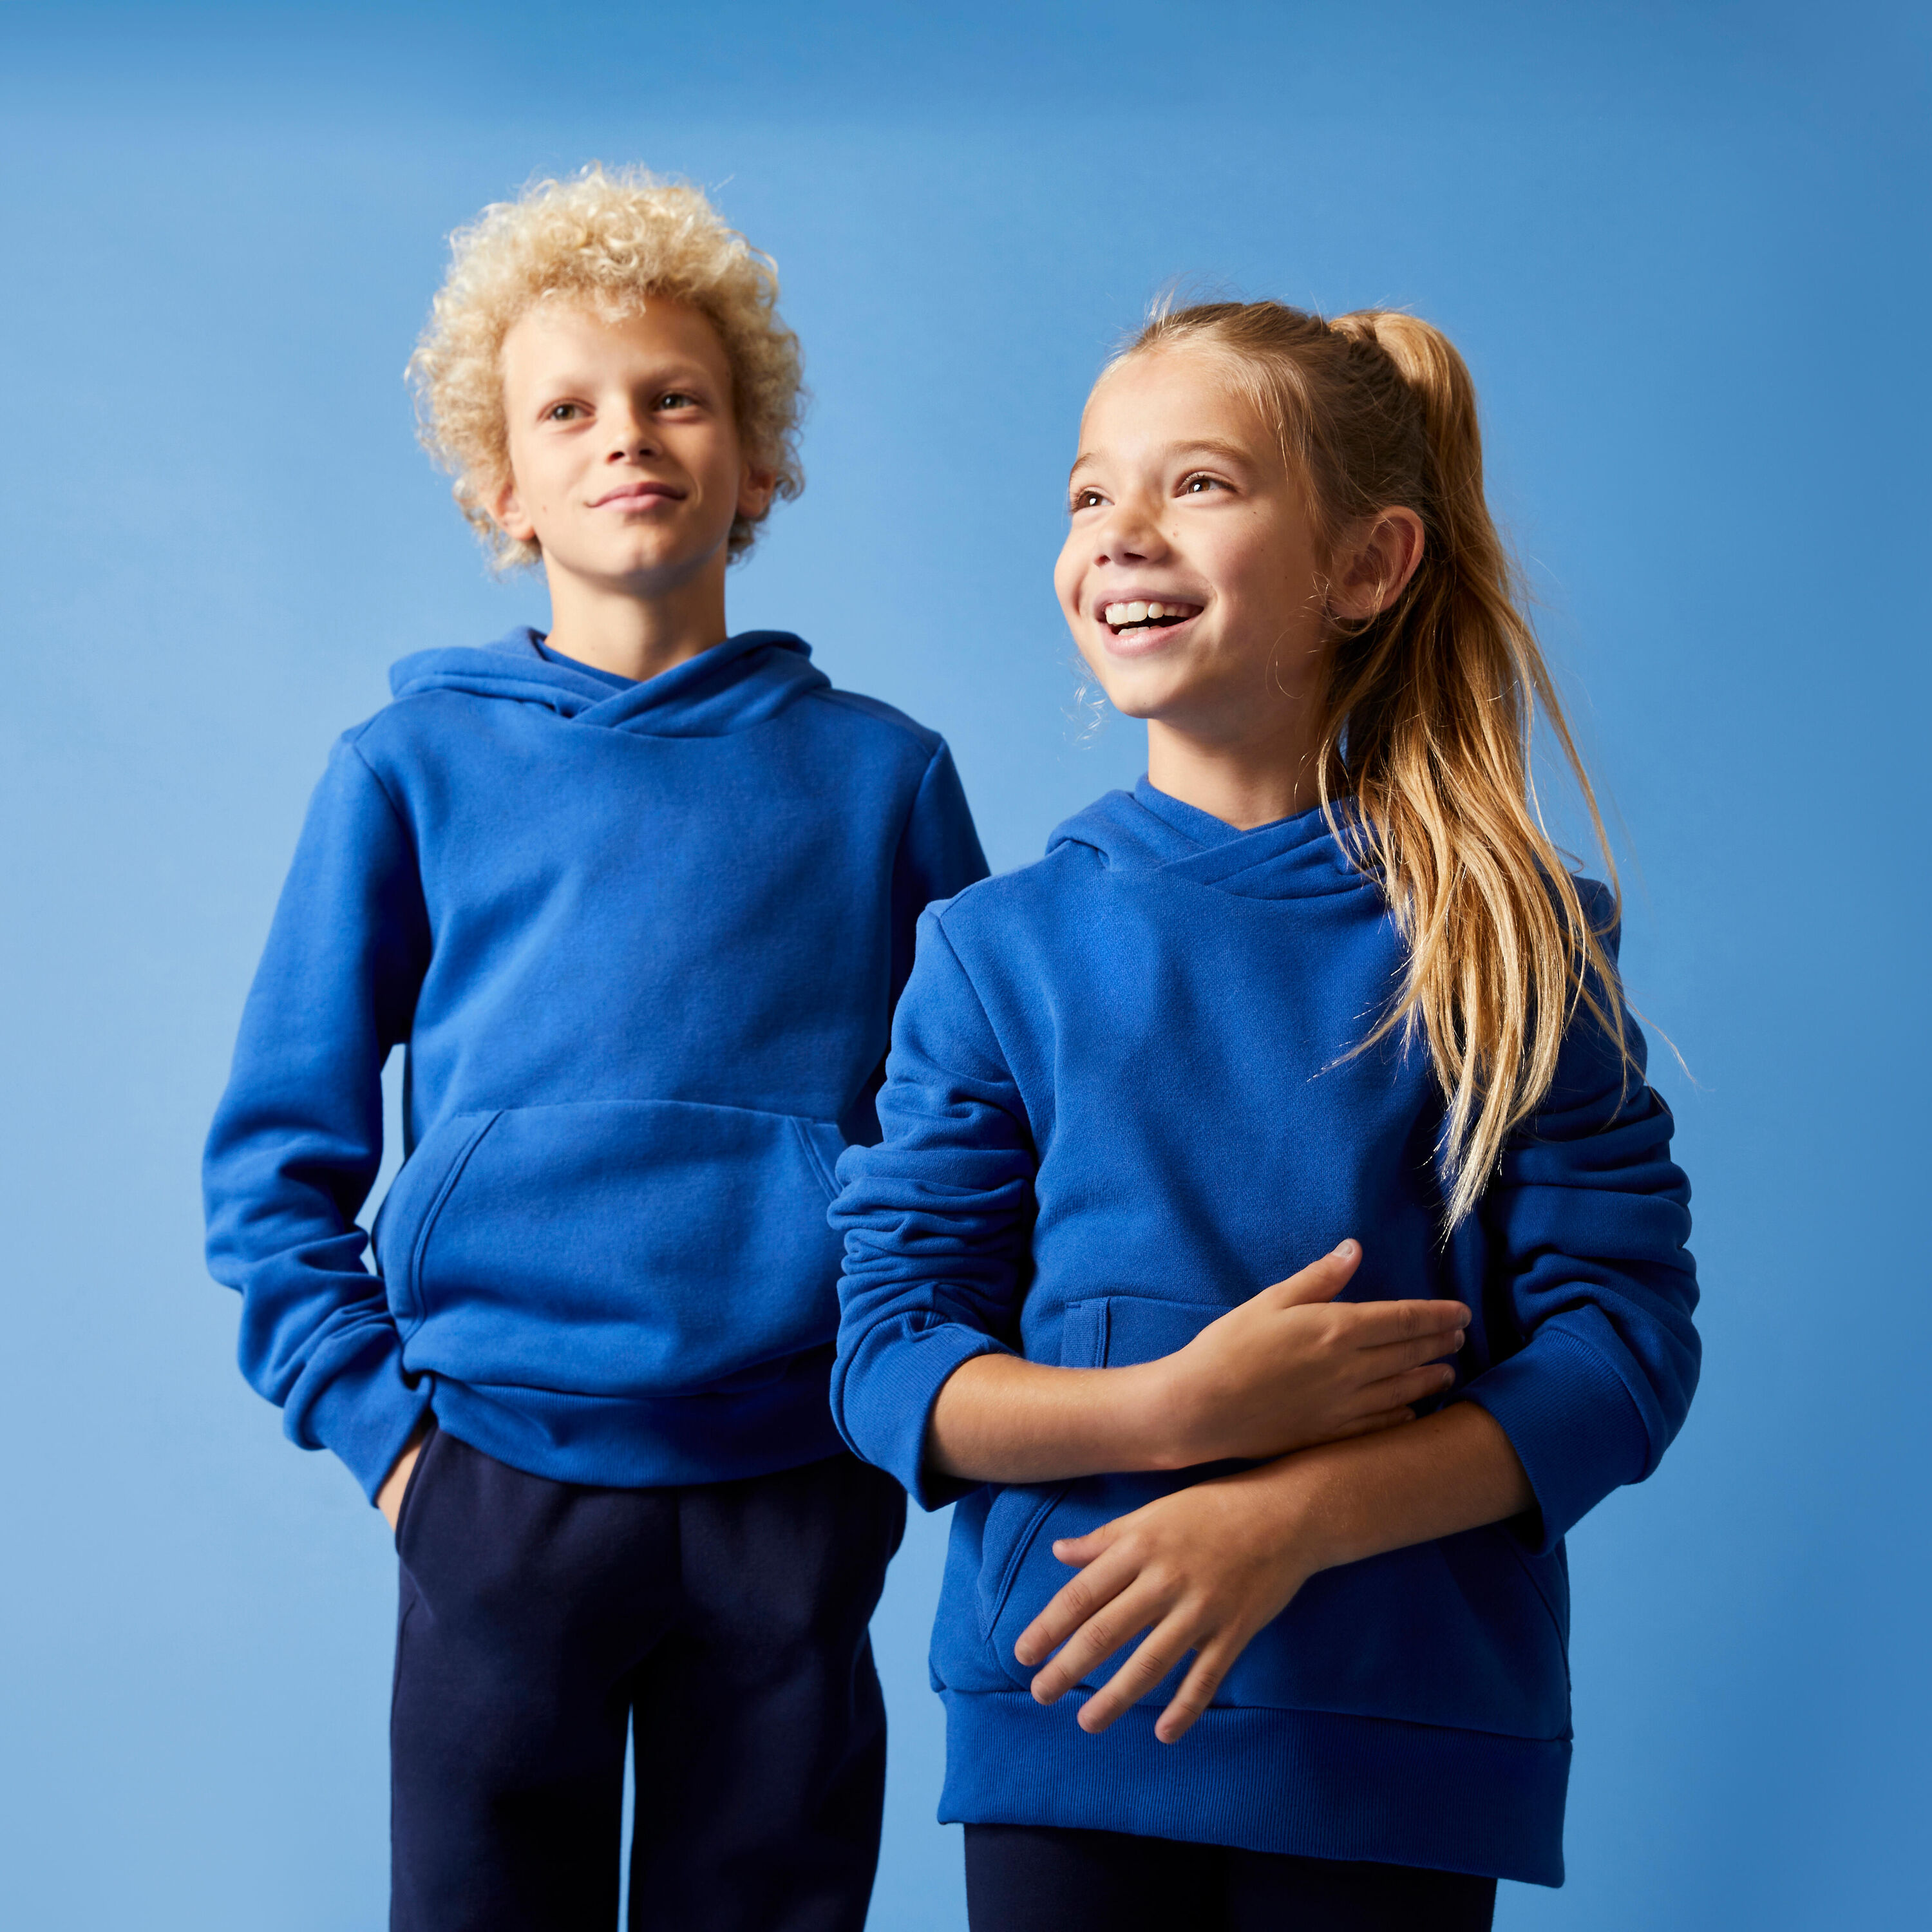 DOMYOS Kids' Cotton Hooded Sweatshirt - Blue